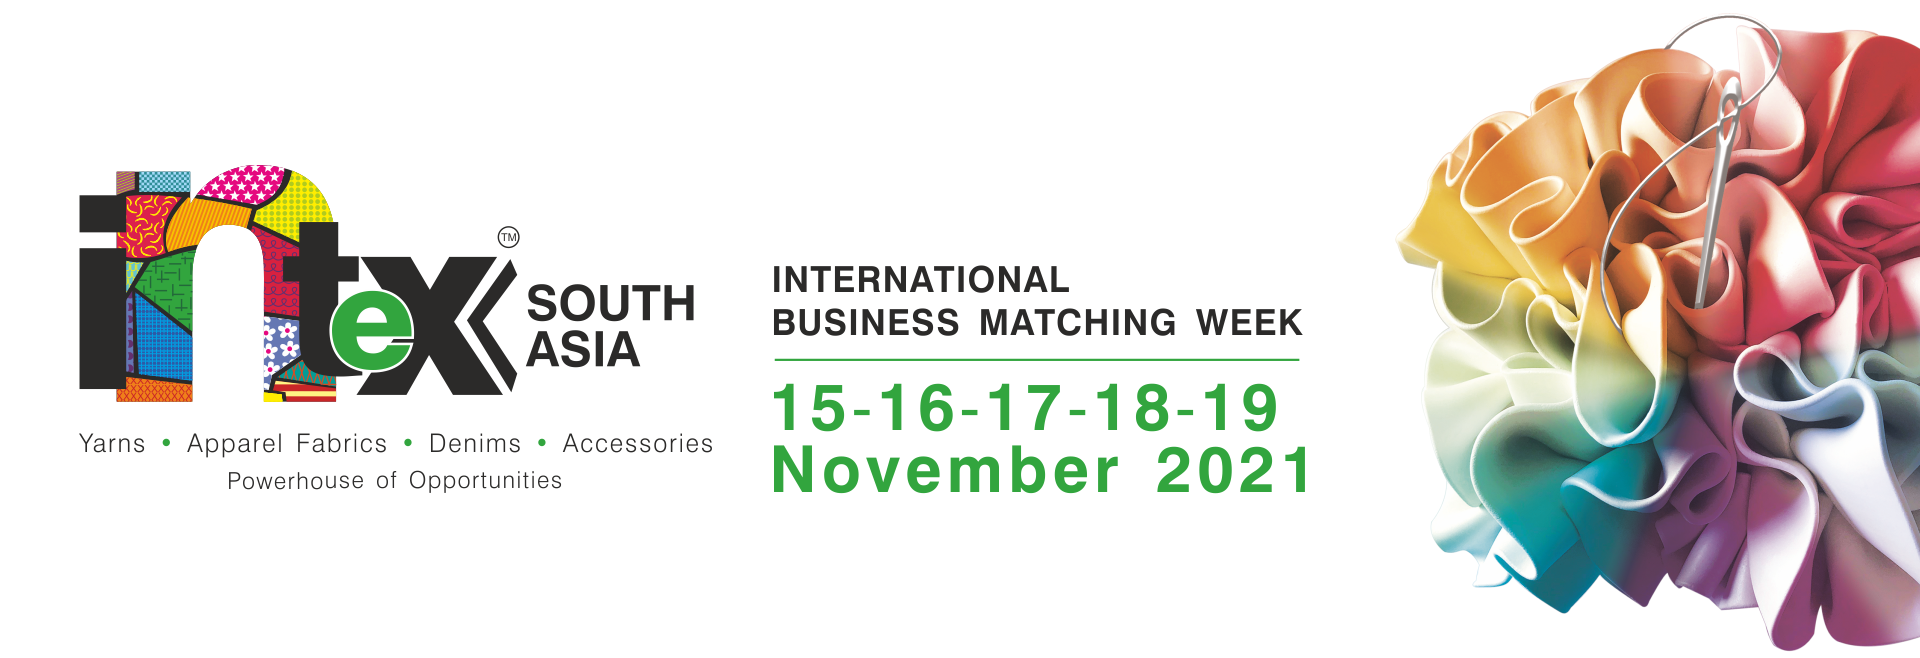 Intex South Asia - International Business Matching Week, Mumbai, Maharashtra, India